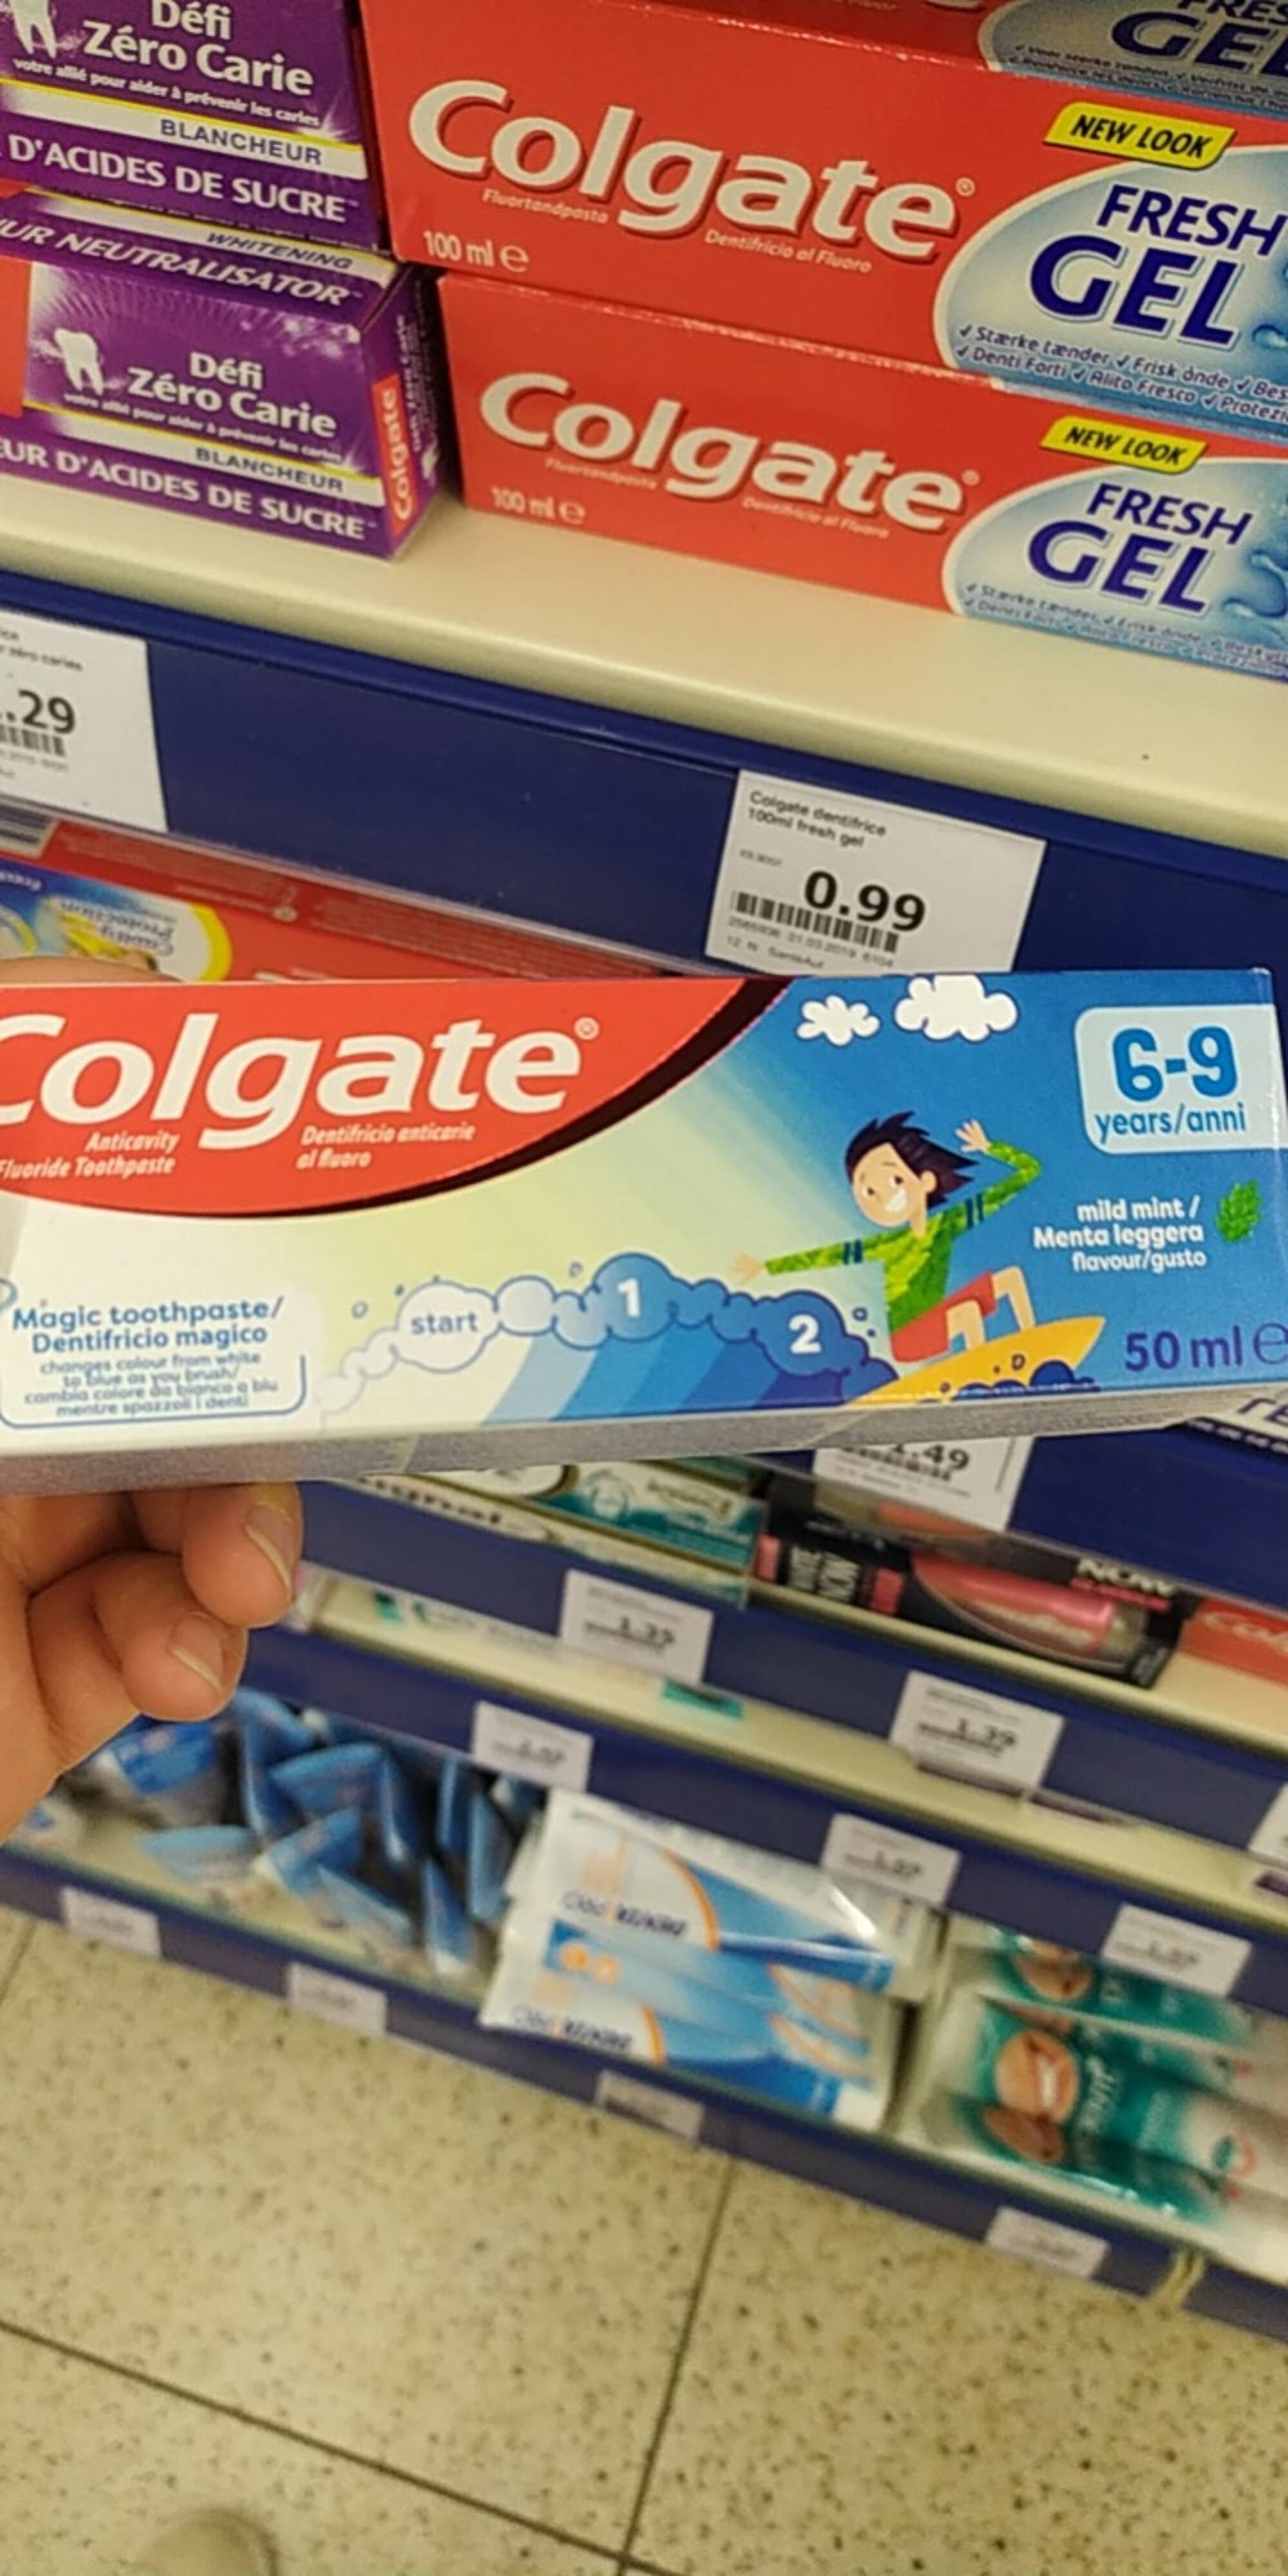 COLGATE - Magic toothpaste - 6-9 years